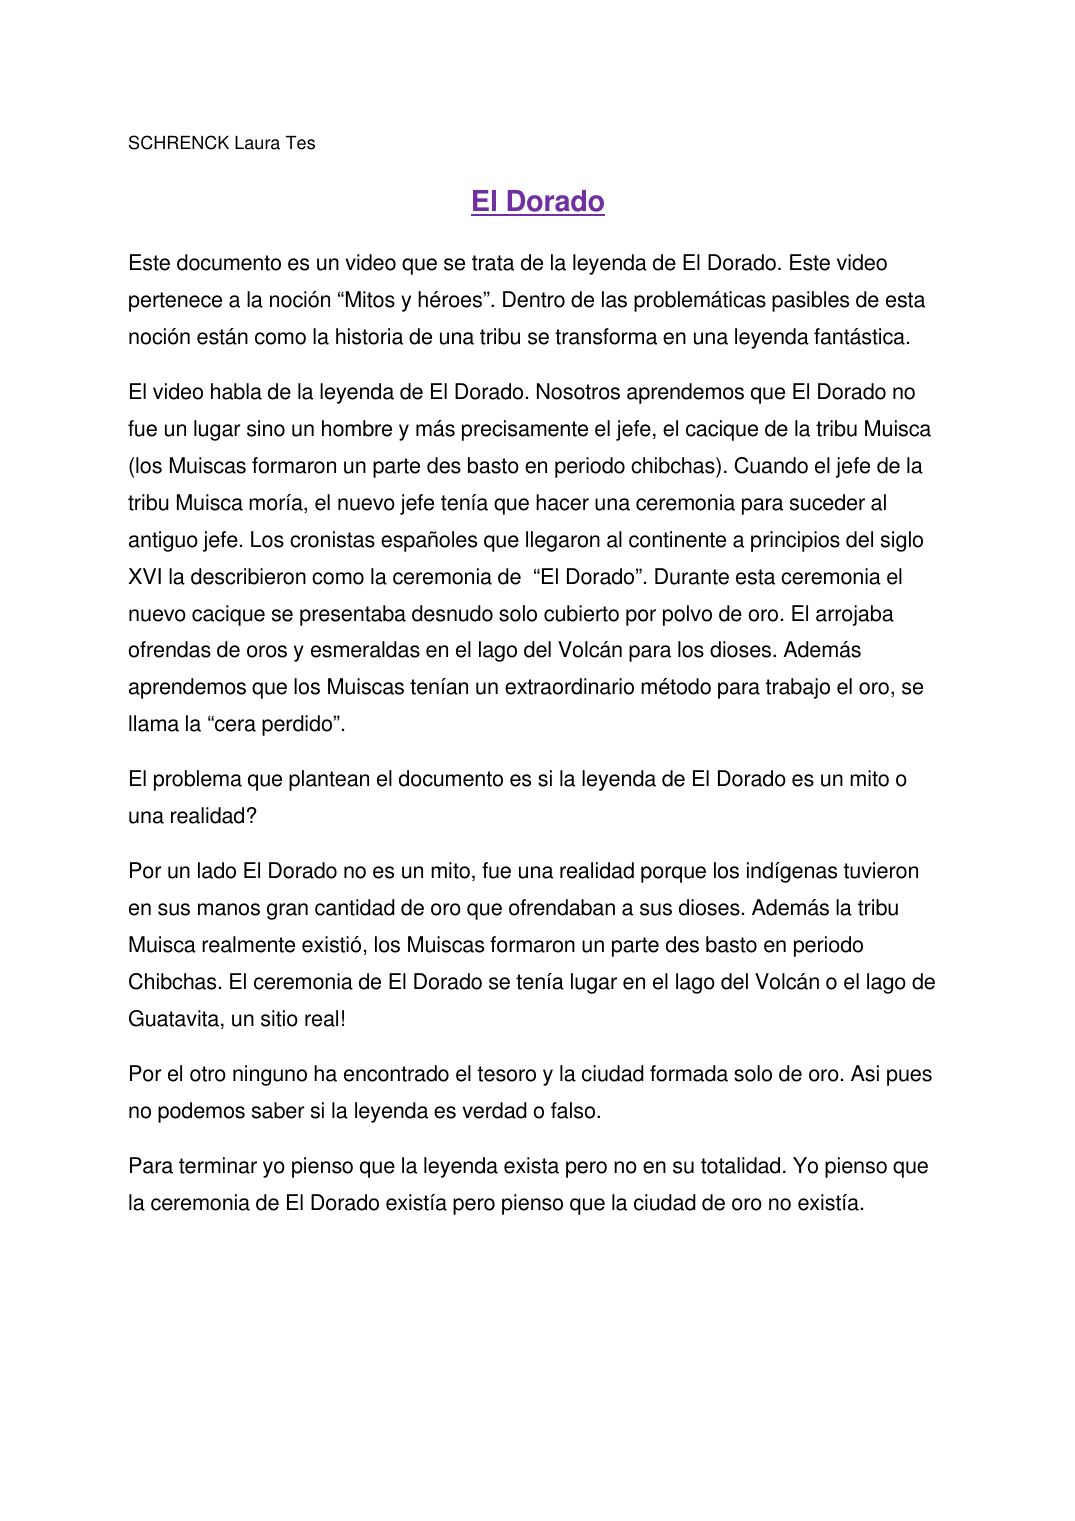 Prévisualisation du document EL DORADO